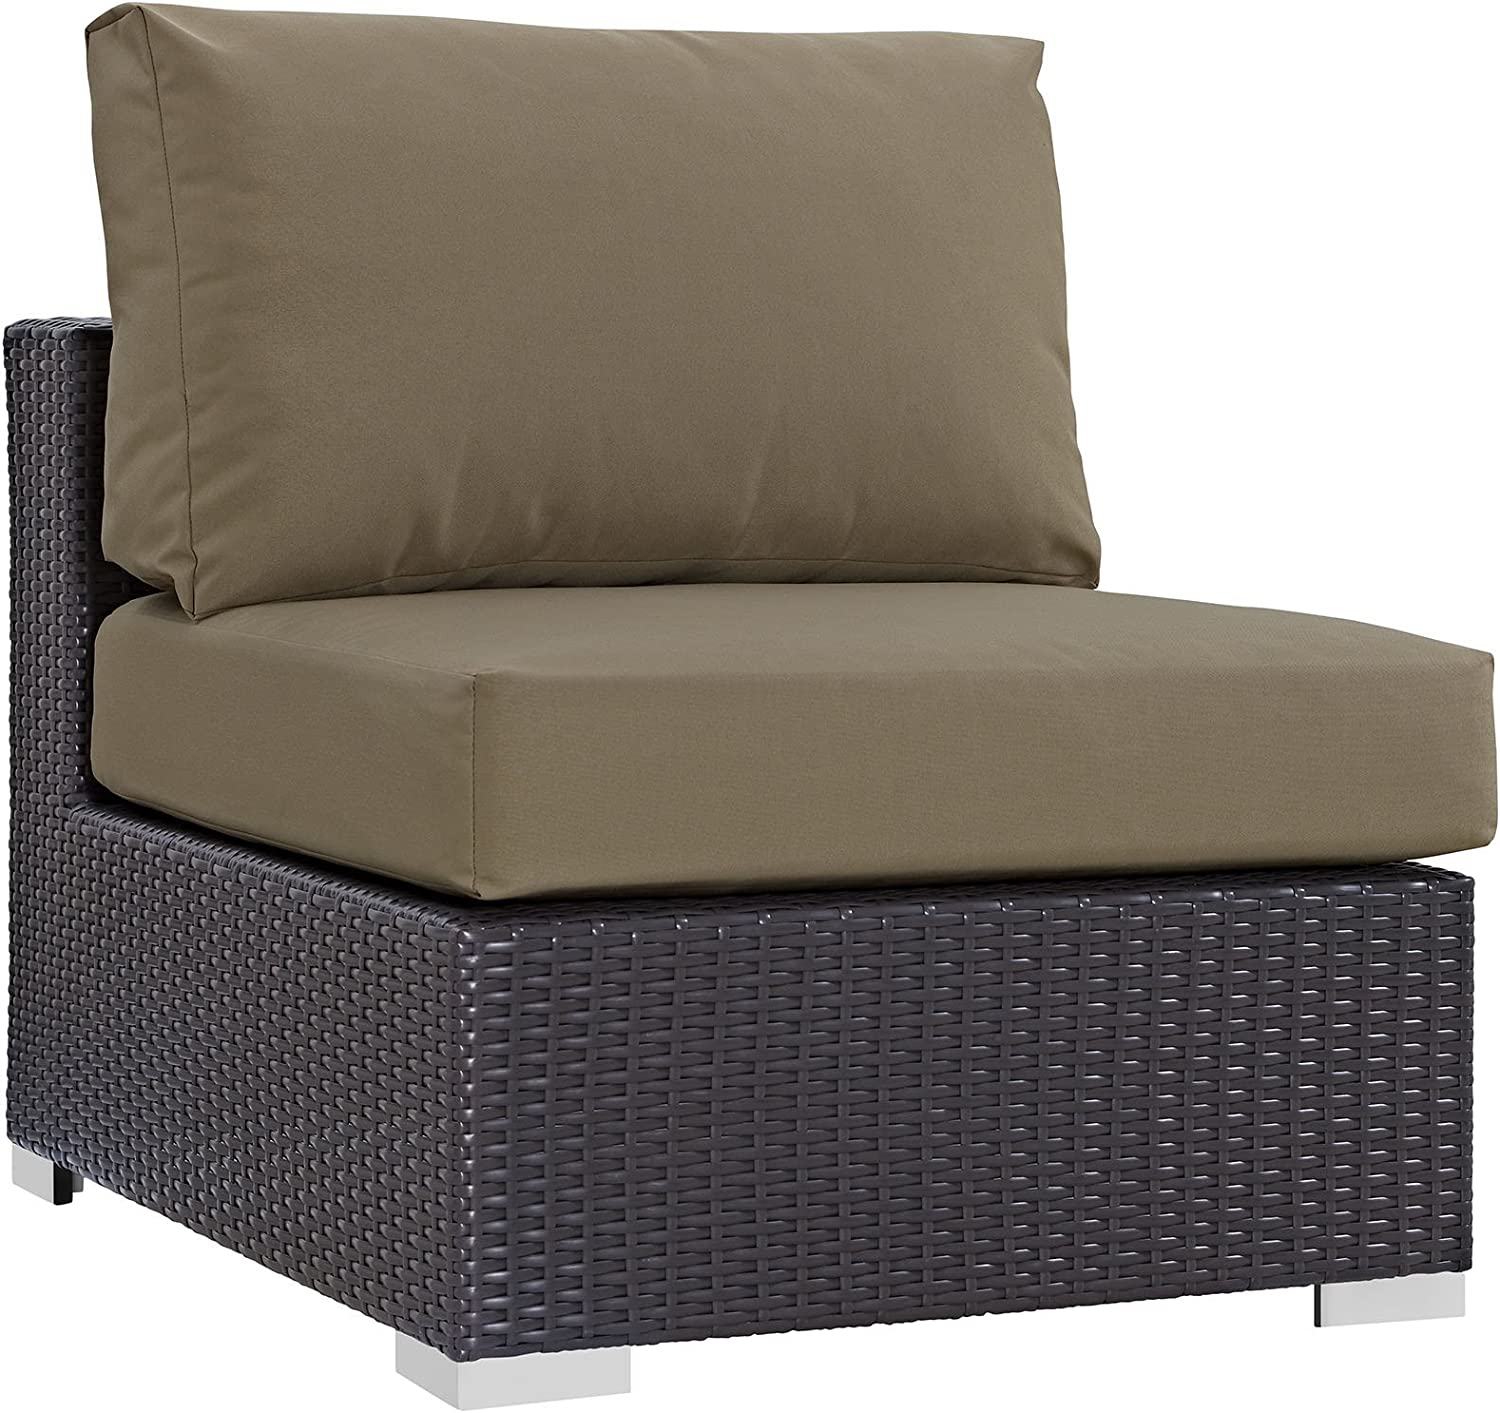 Modway Convene Wicker Rattan Outdoor Patio Sectional Sofa Armless Chair in Espresso Mocha